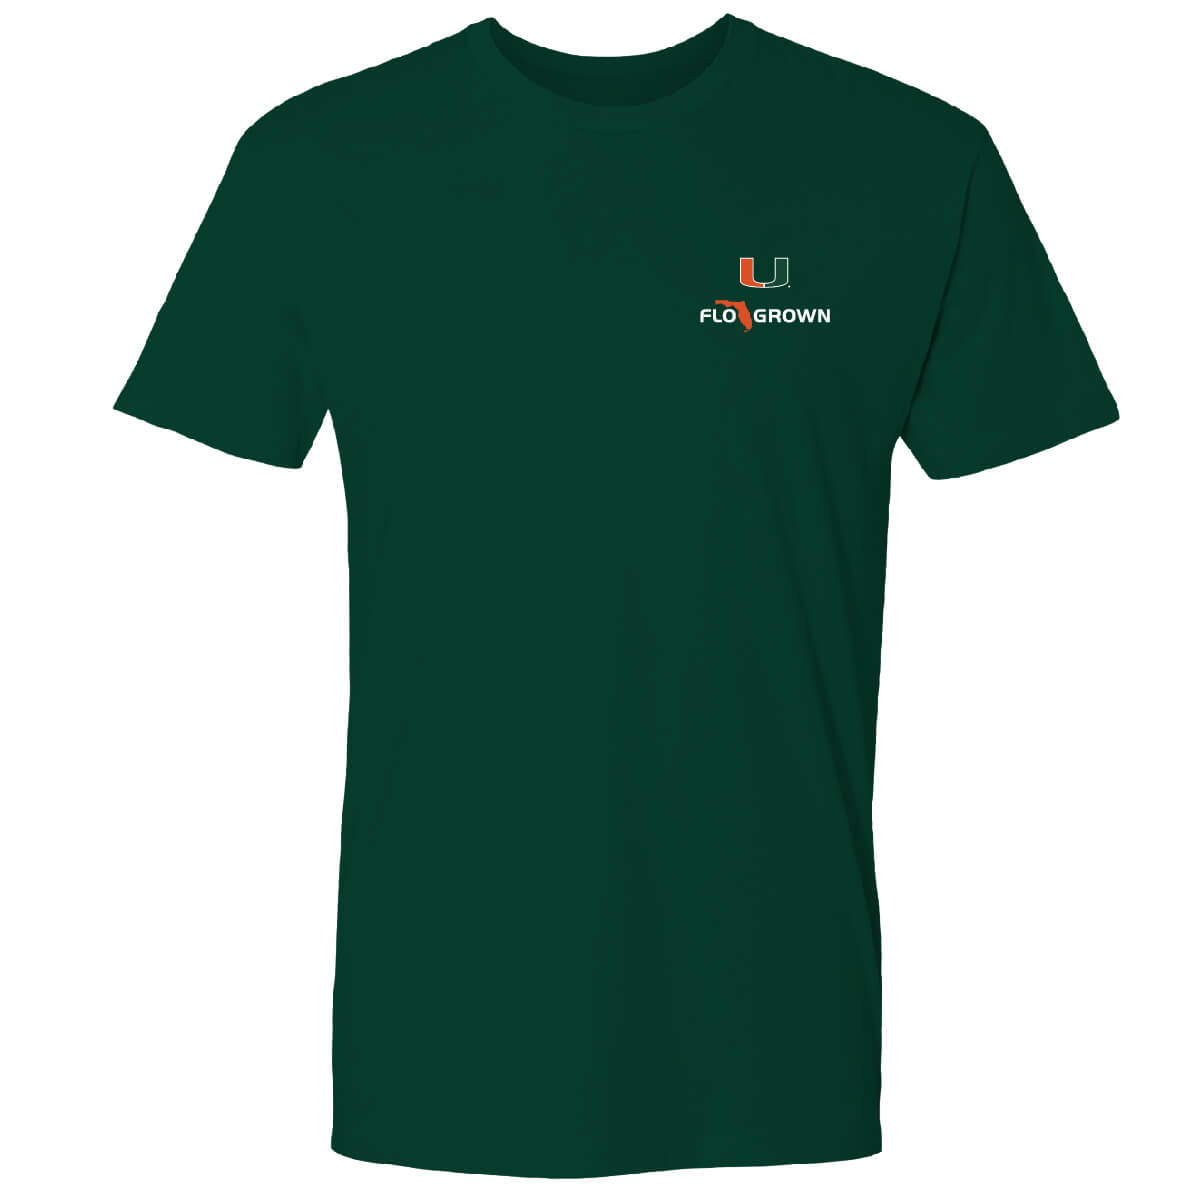 Miami Hurricanes FLOGROWN Trolling Flag T-Shirt - Green